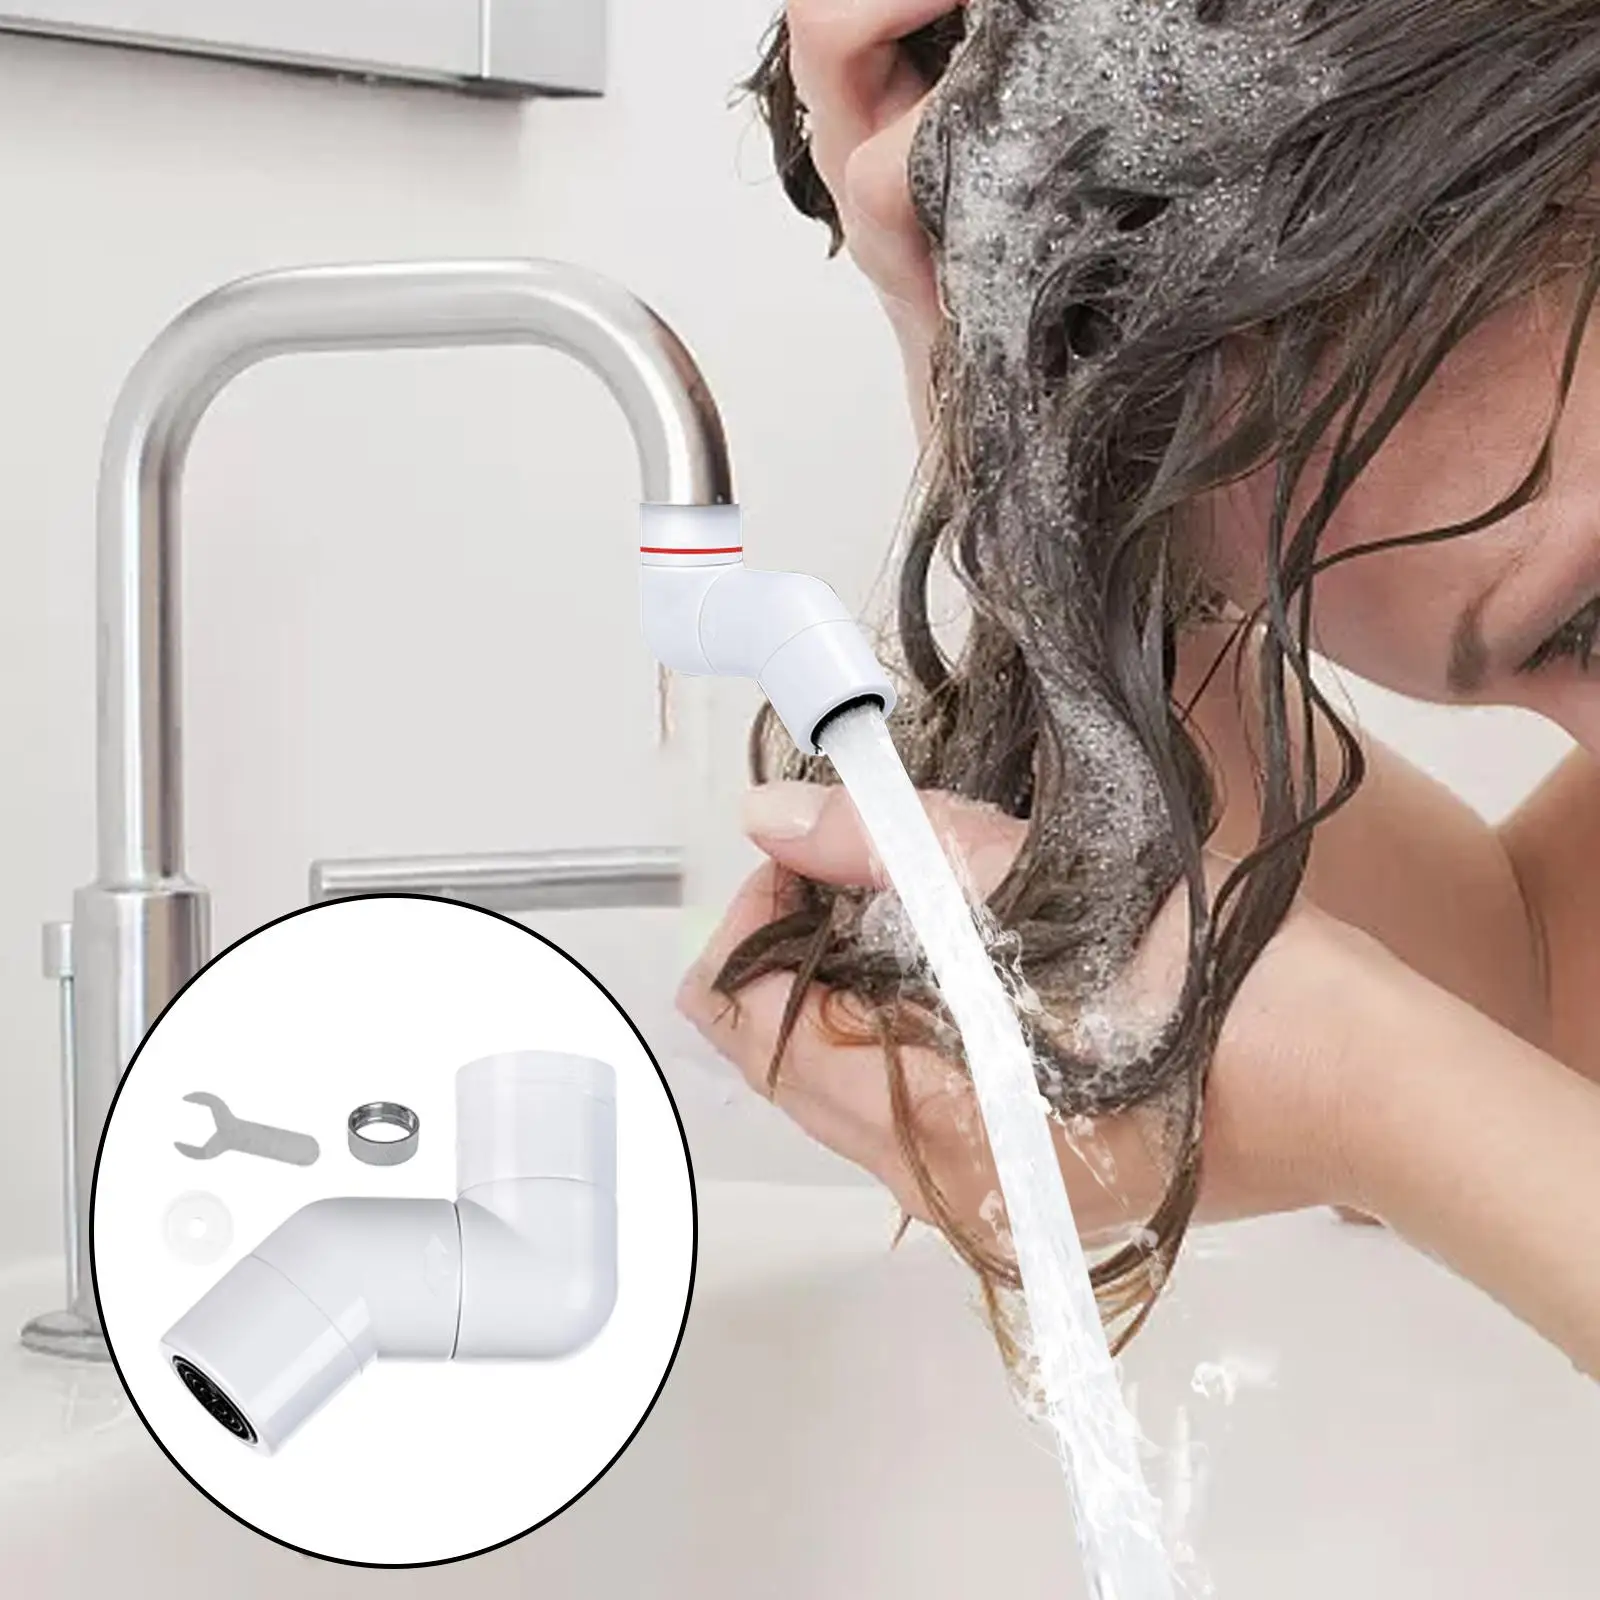 720 Degree Sink Tap Head Water Faucet Extender Aerator,Water Saving,Splashproof for Home Kitchen Bathroom Face Washing Gargle